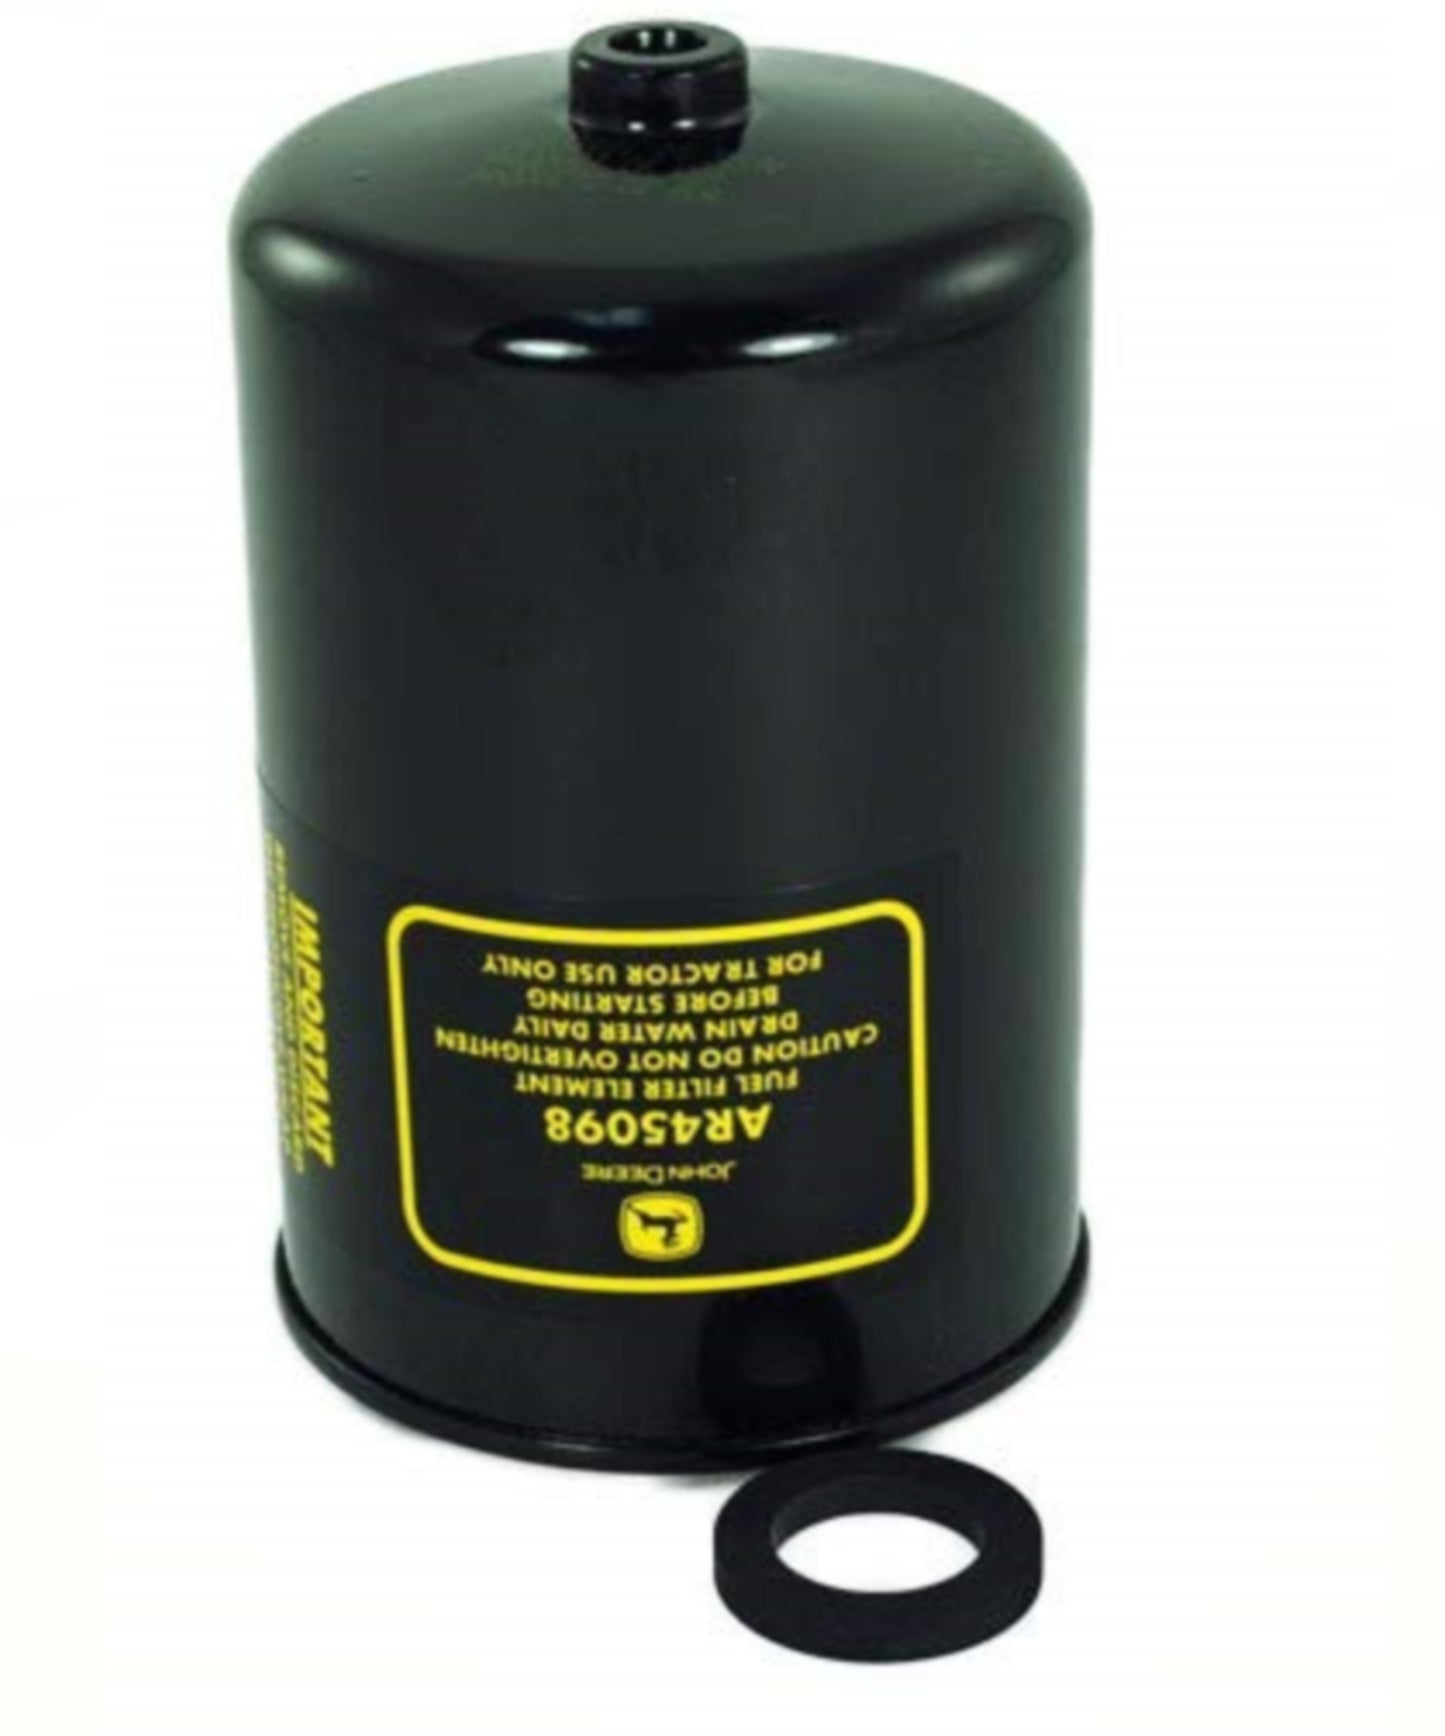 John Deere Original Equipment Fuel Filter - AR45098,1